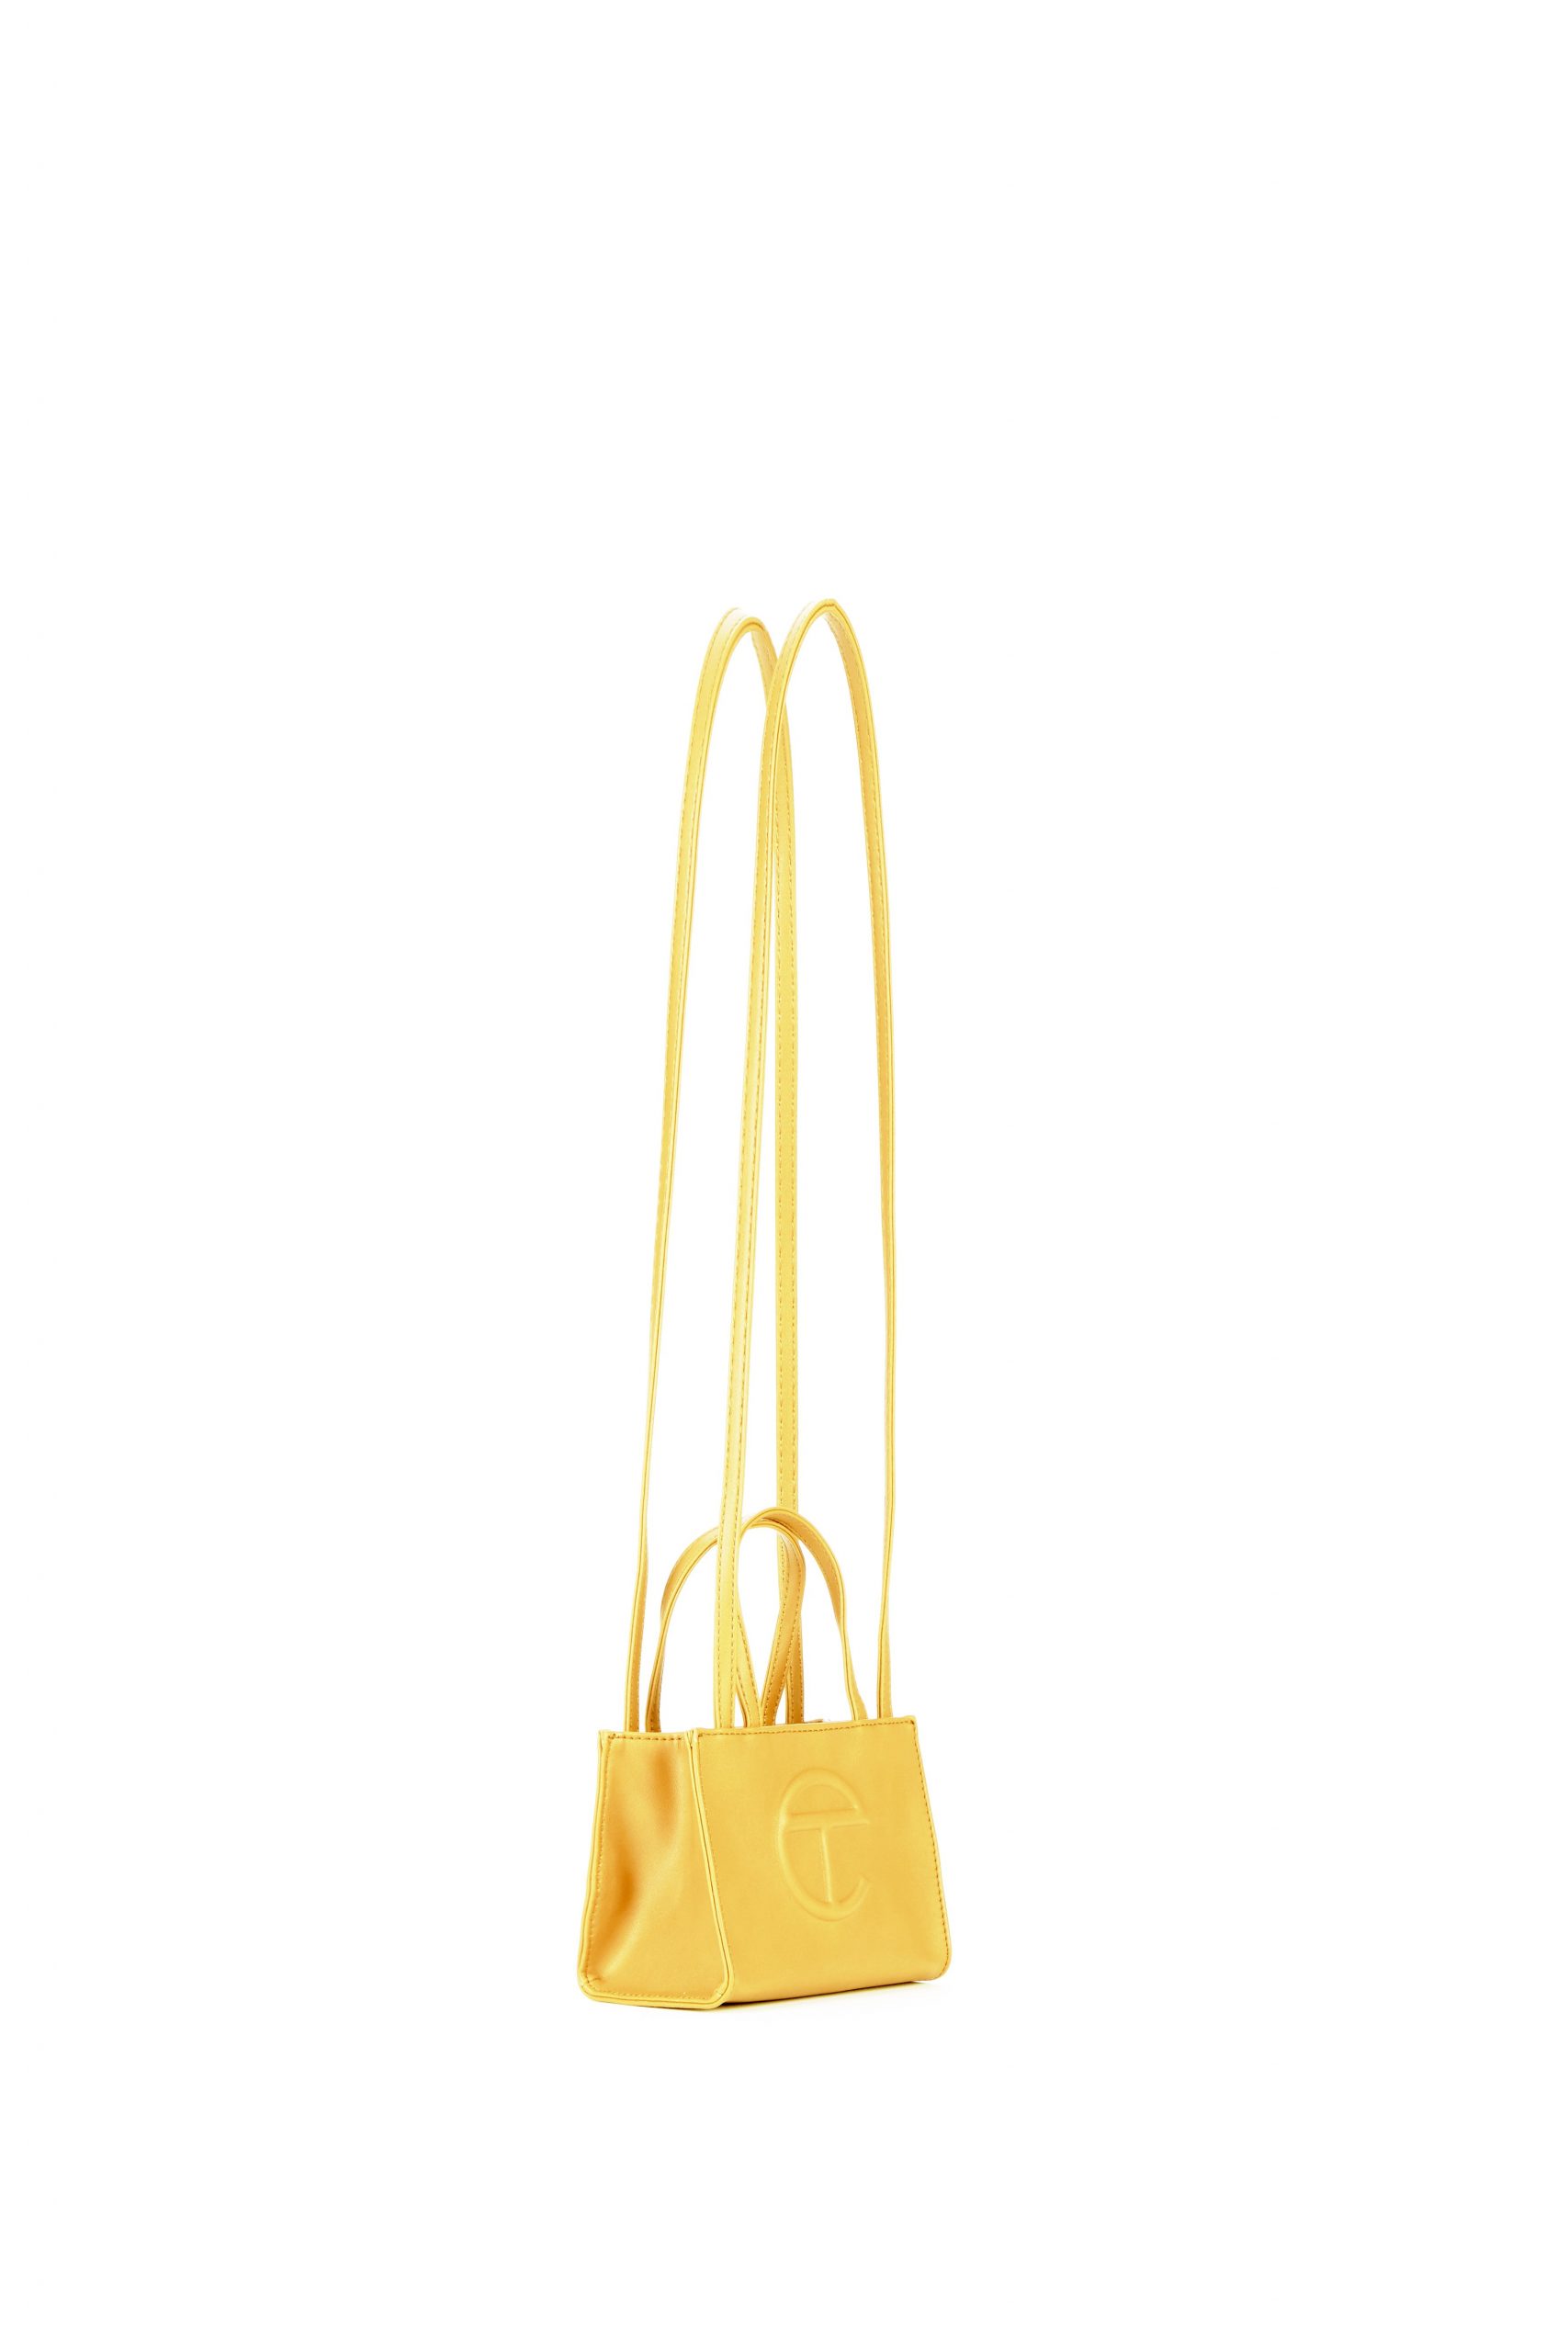 Small Yellow Shopping Bag